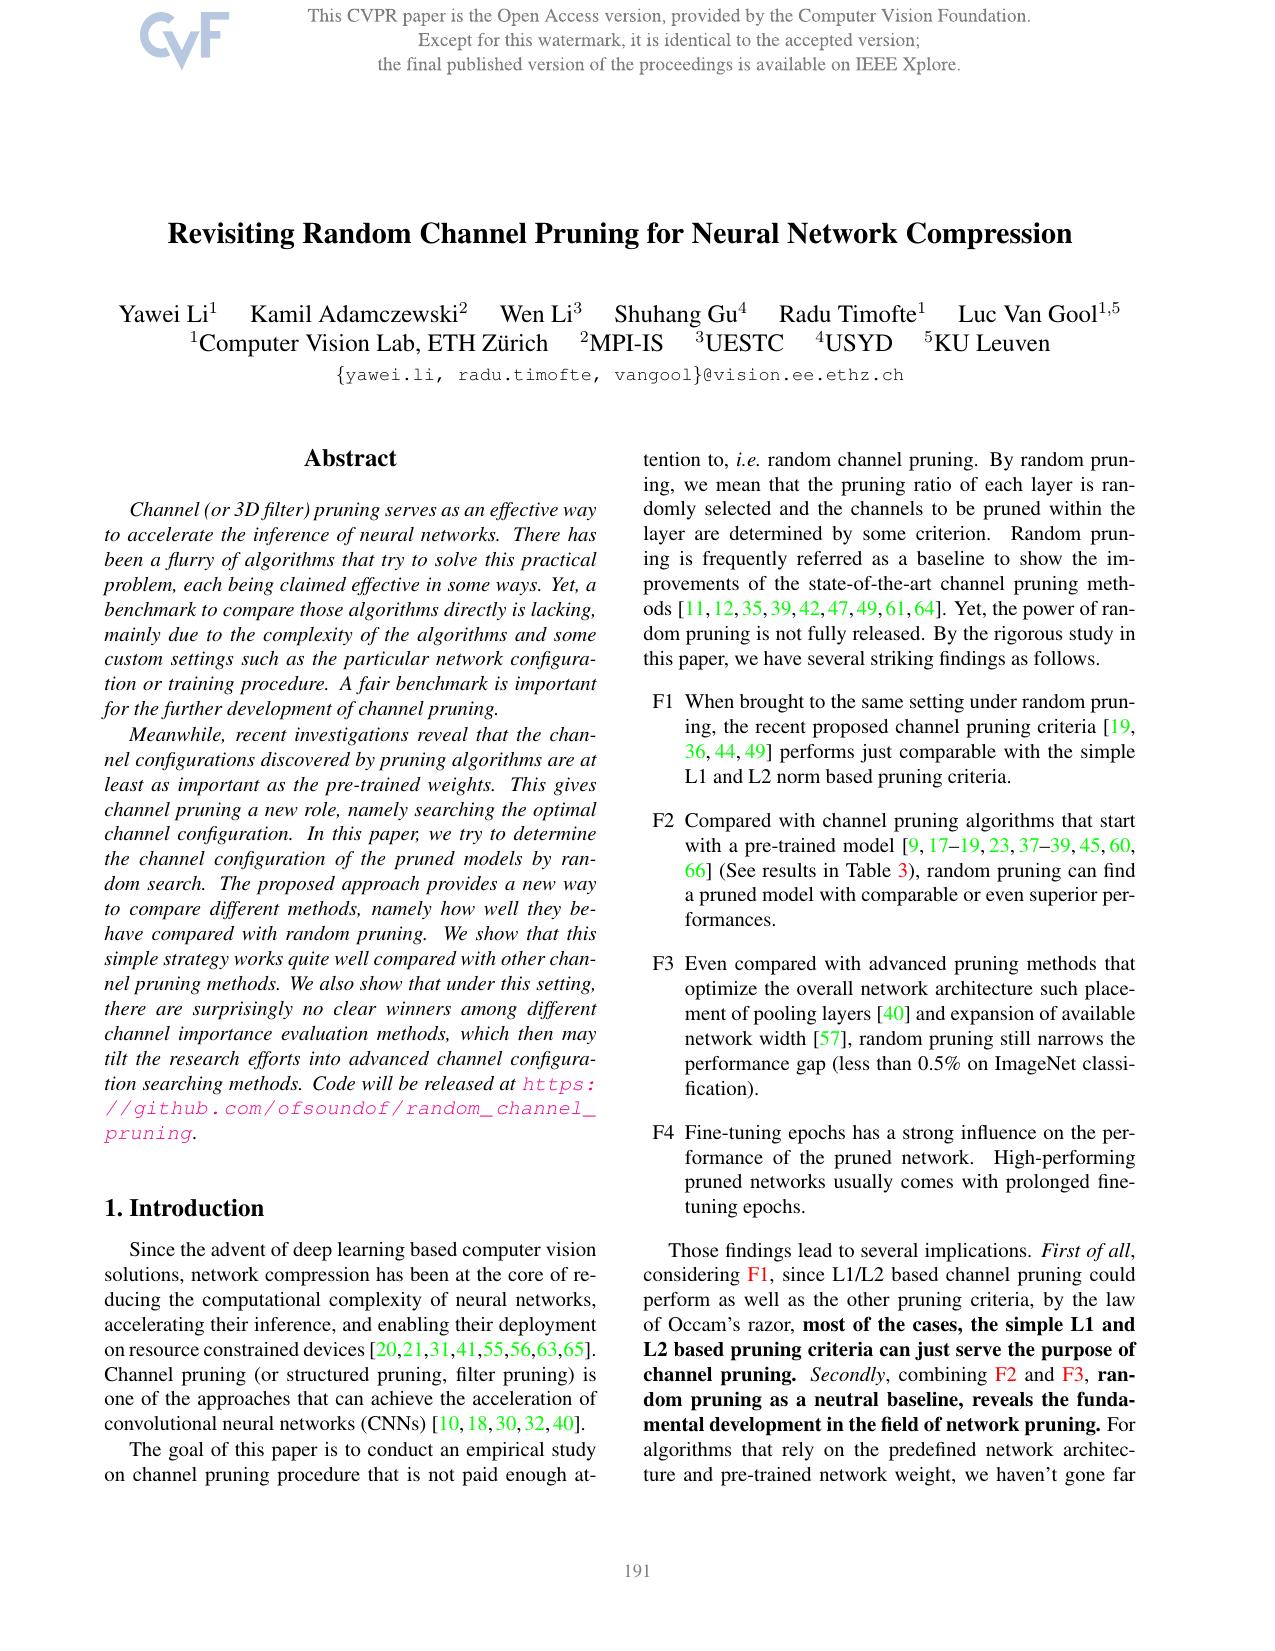 Revisiting Random Channel Pruning for Neural Network Compression by Yawei Li & Kamil Adamczewski & Wen Li & Shuhang Gu & Radu Timofte & Luc Van Gool